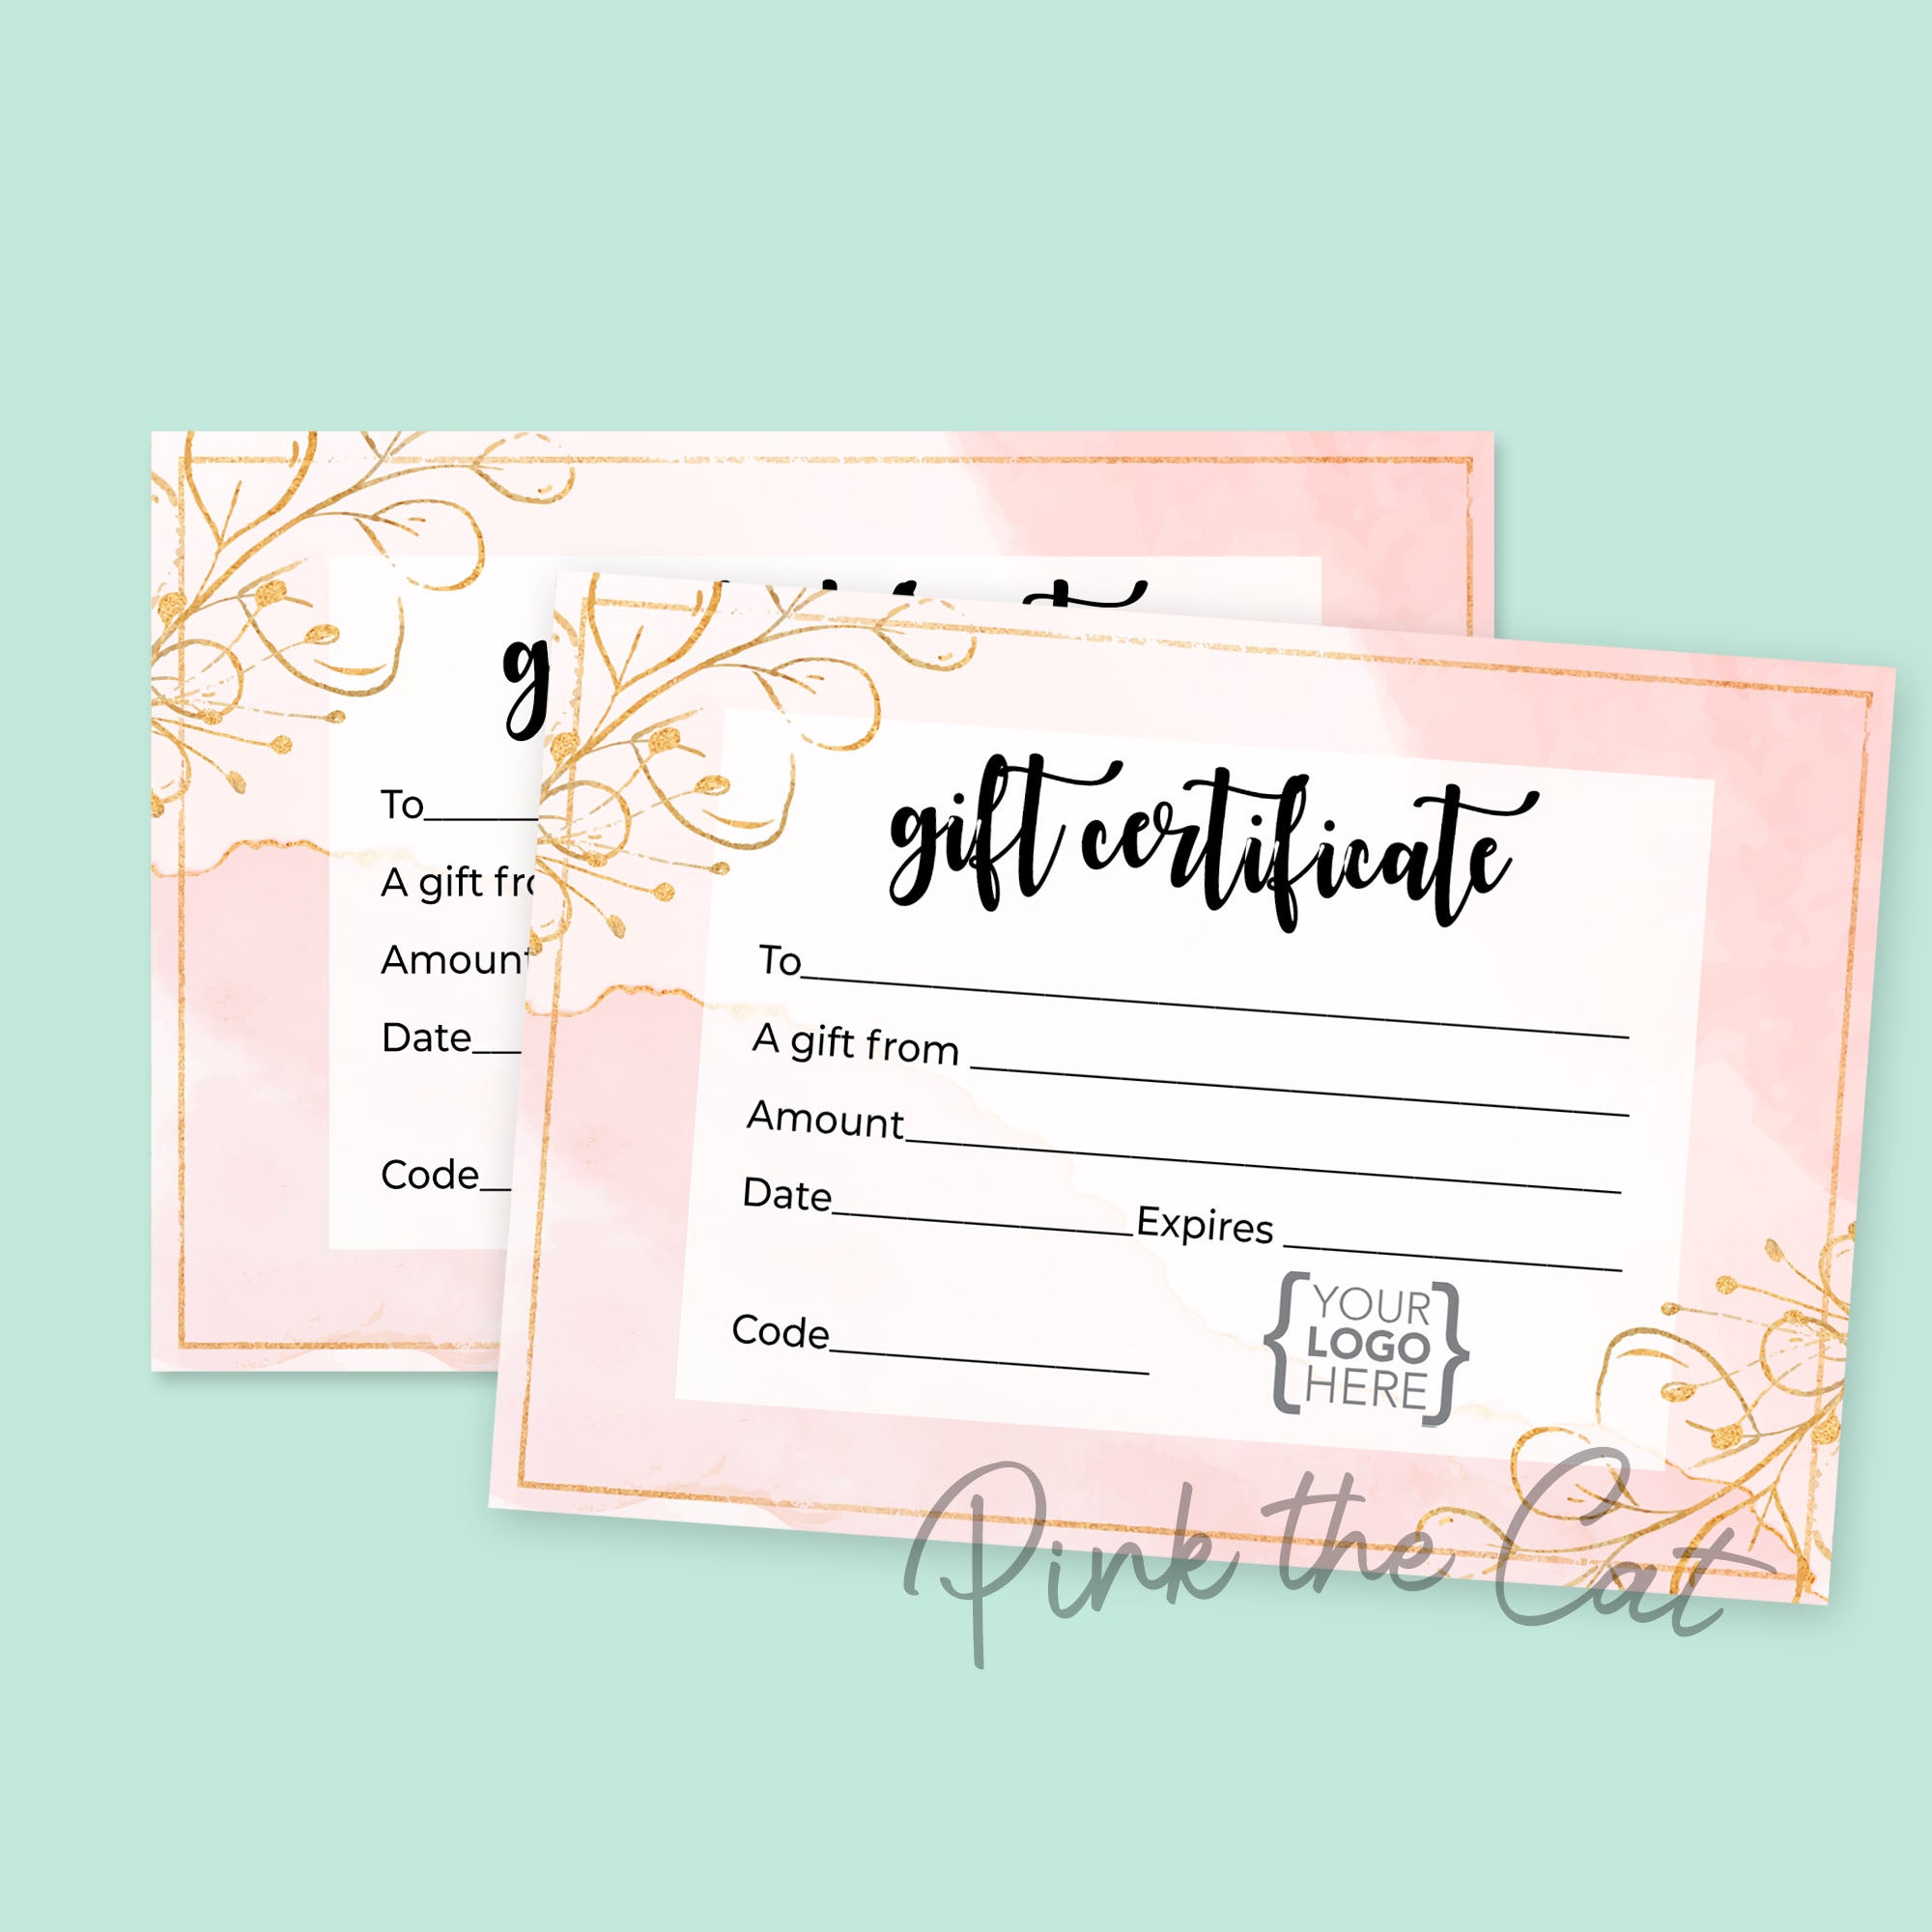 Gift certificate card watercolor pink